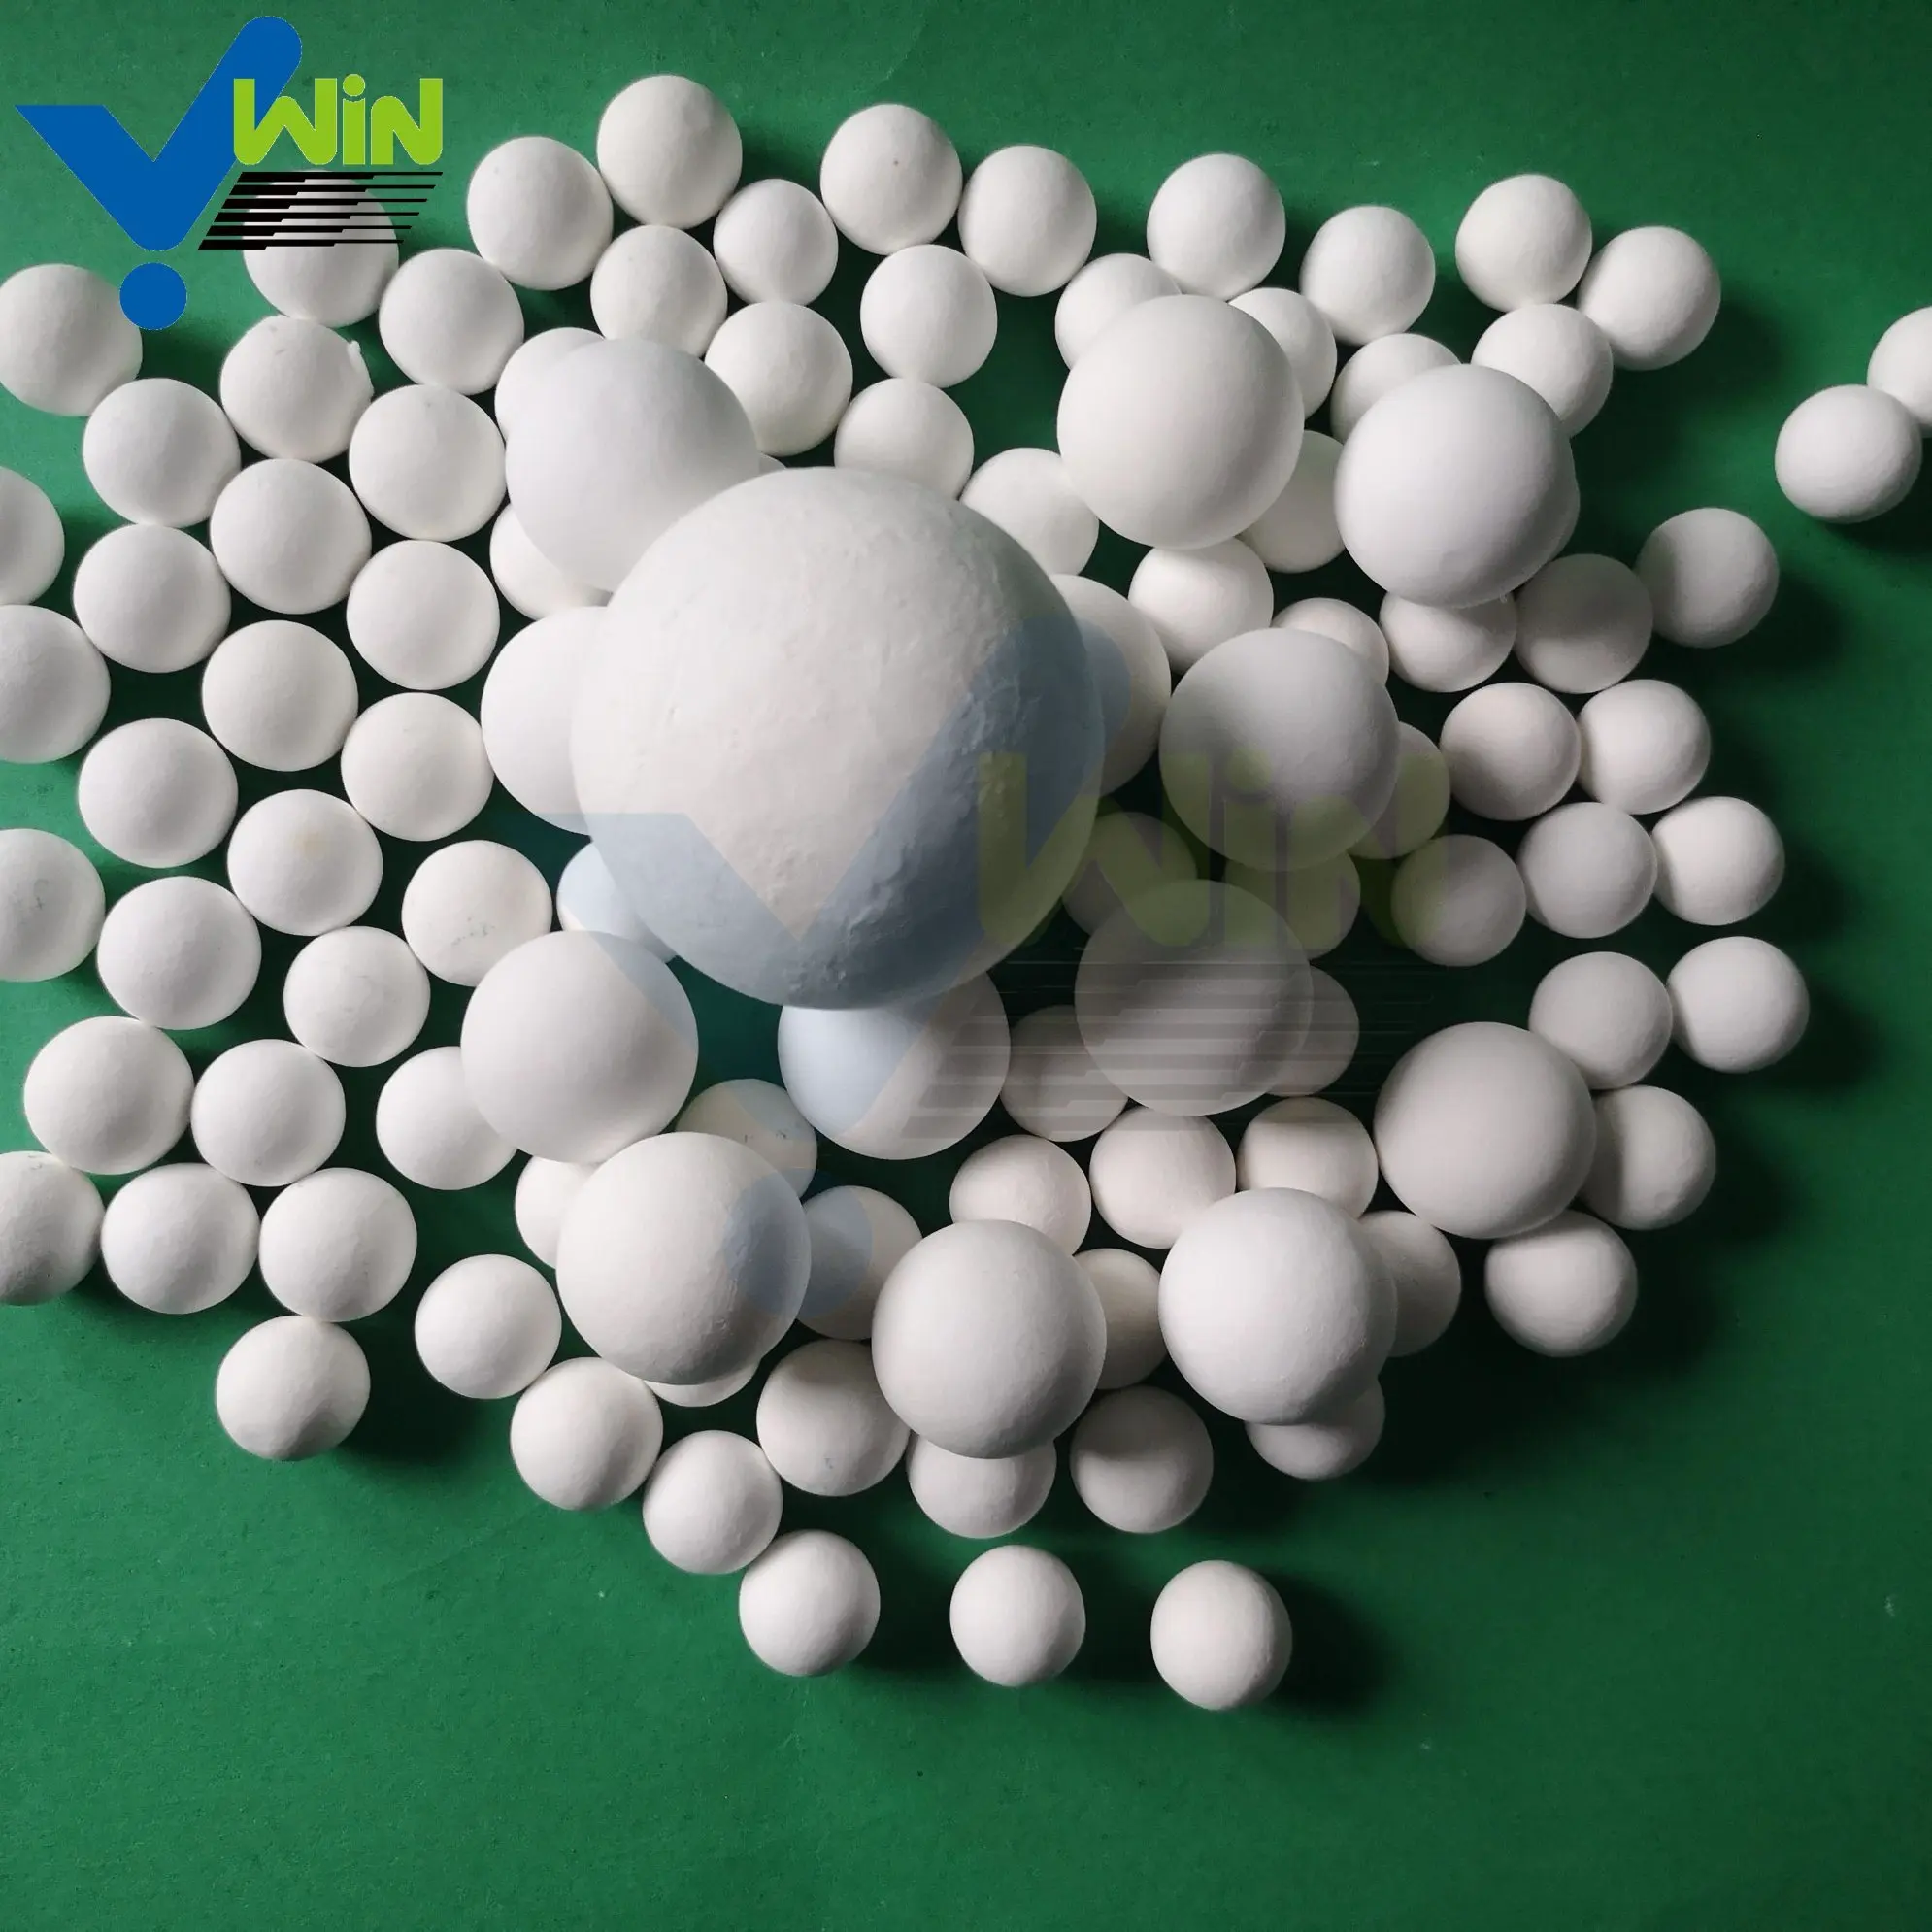 Zibo Win-Ceramic wear-resistant ceramic manufacturer customizes inert alumina ceramic filler balls as catalyst bed support media